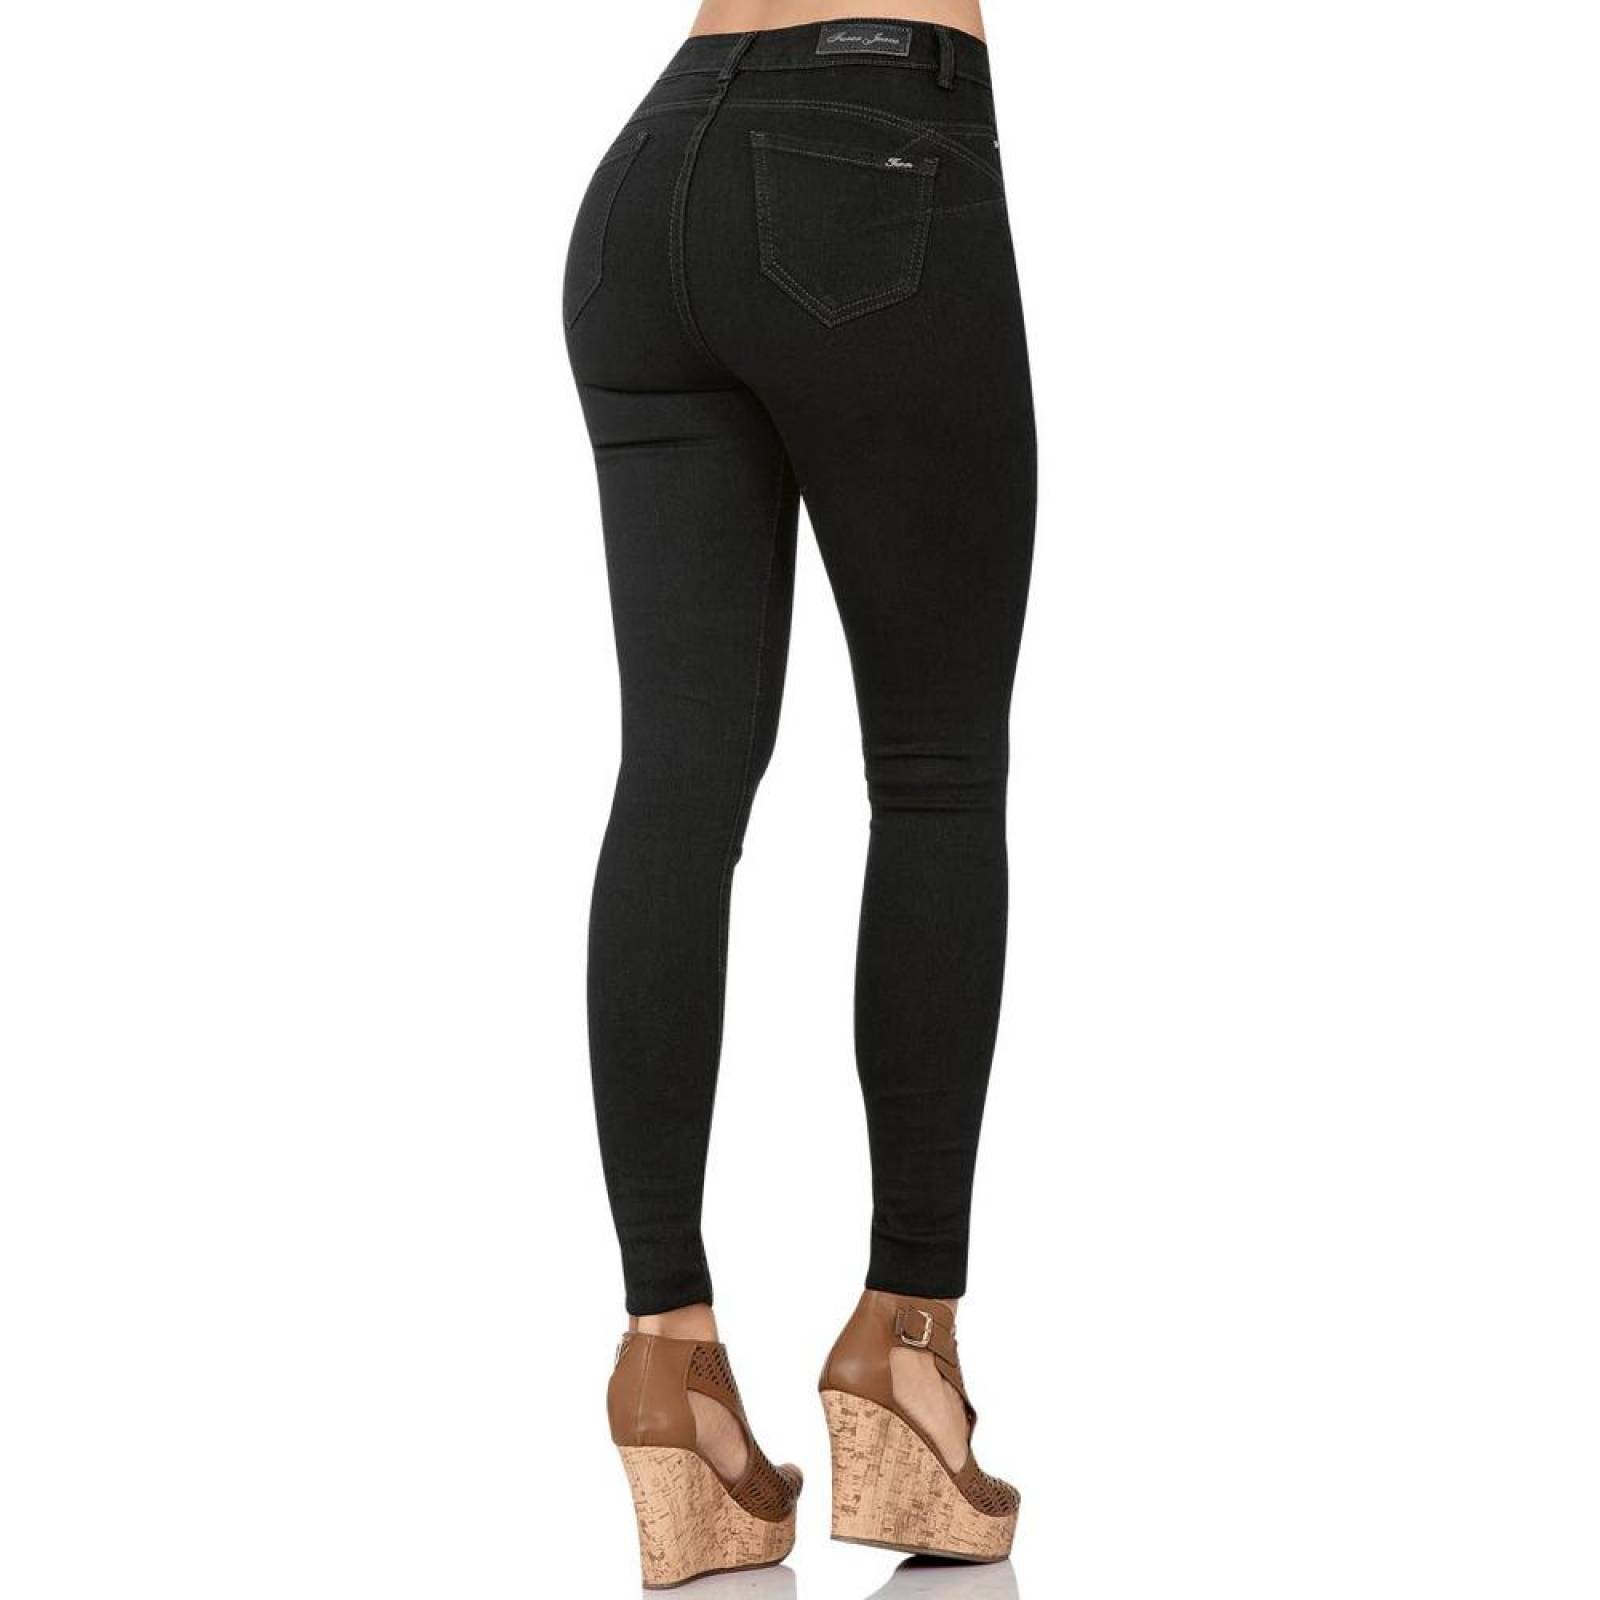 Jeans Básico Mujer Furor Negro 62104008 Mezclilla Stretch 